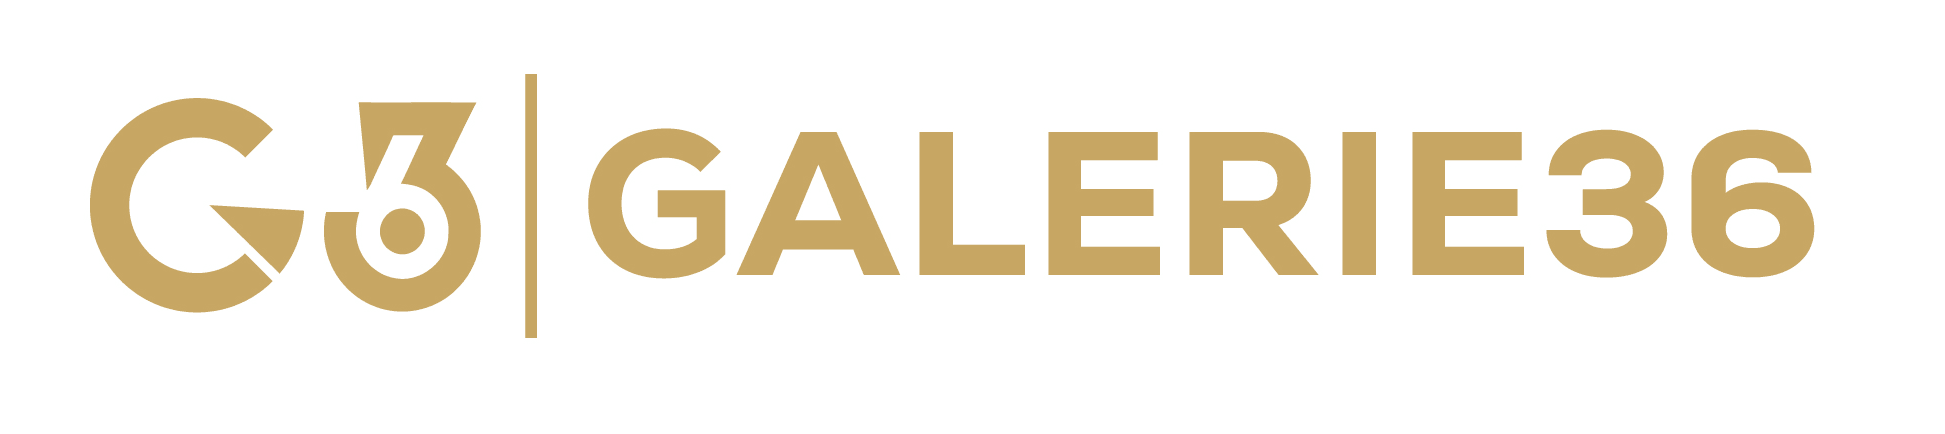 Galerie36 company logo